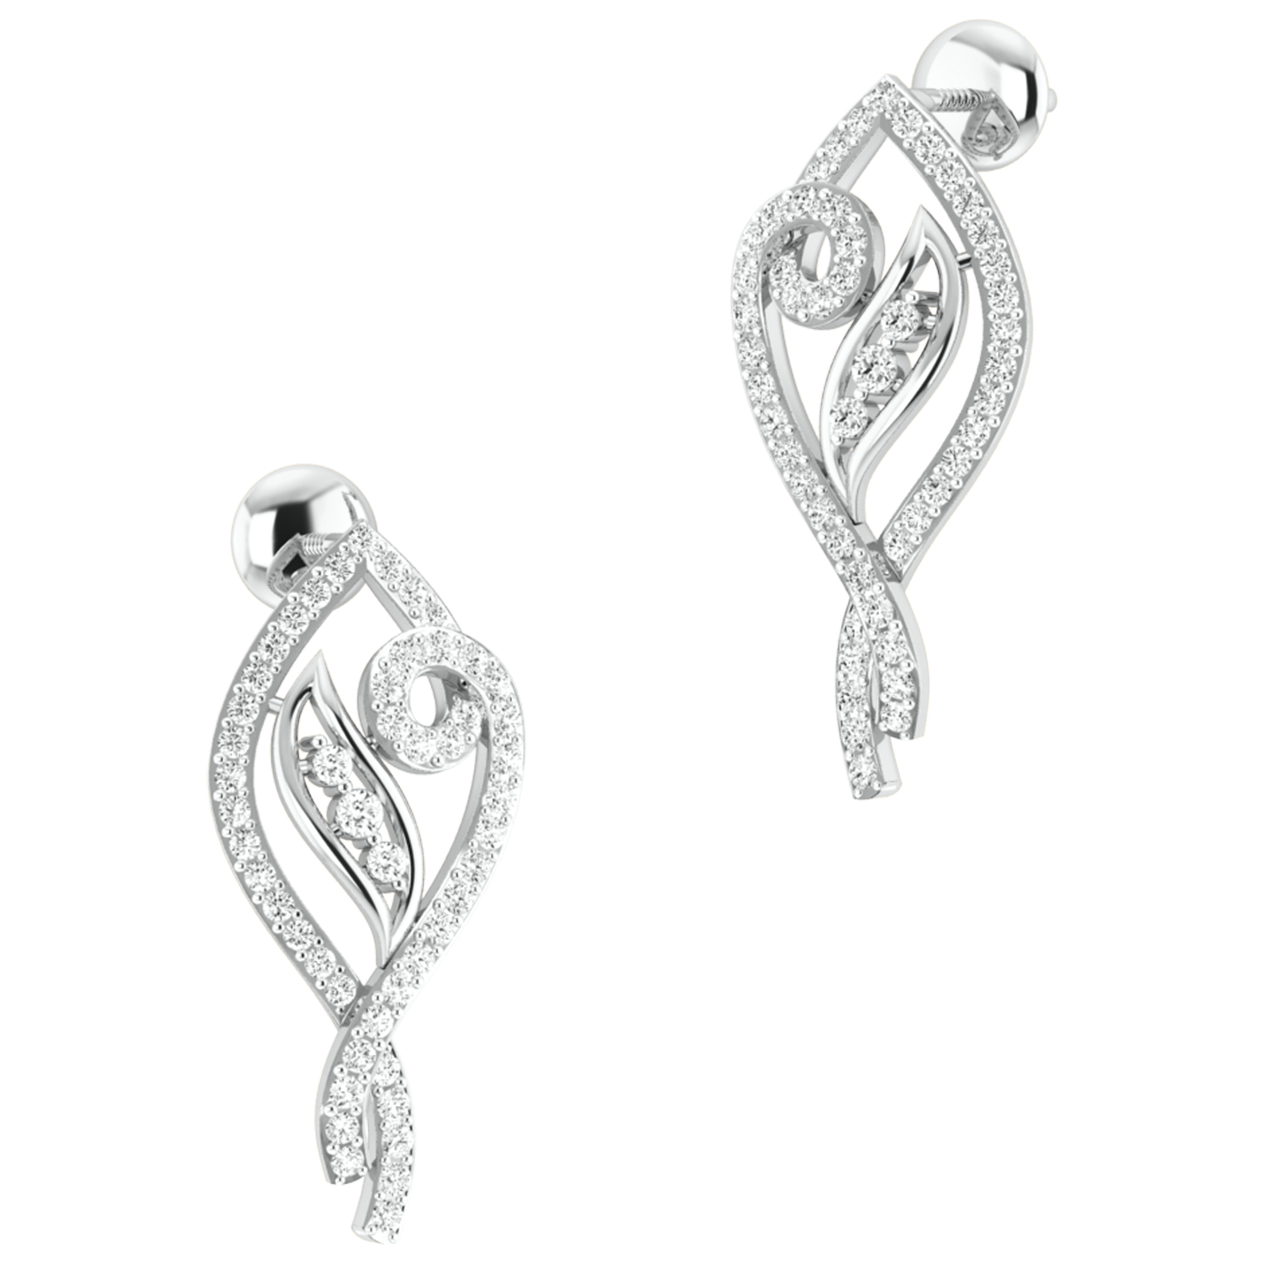 The Kayla Round Diamond Stud Earrings